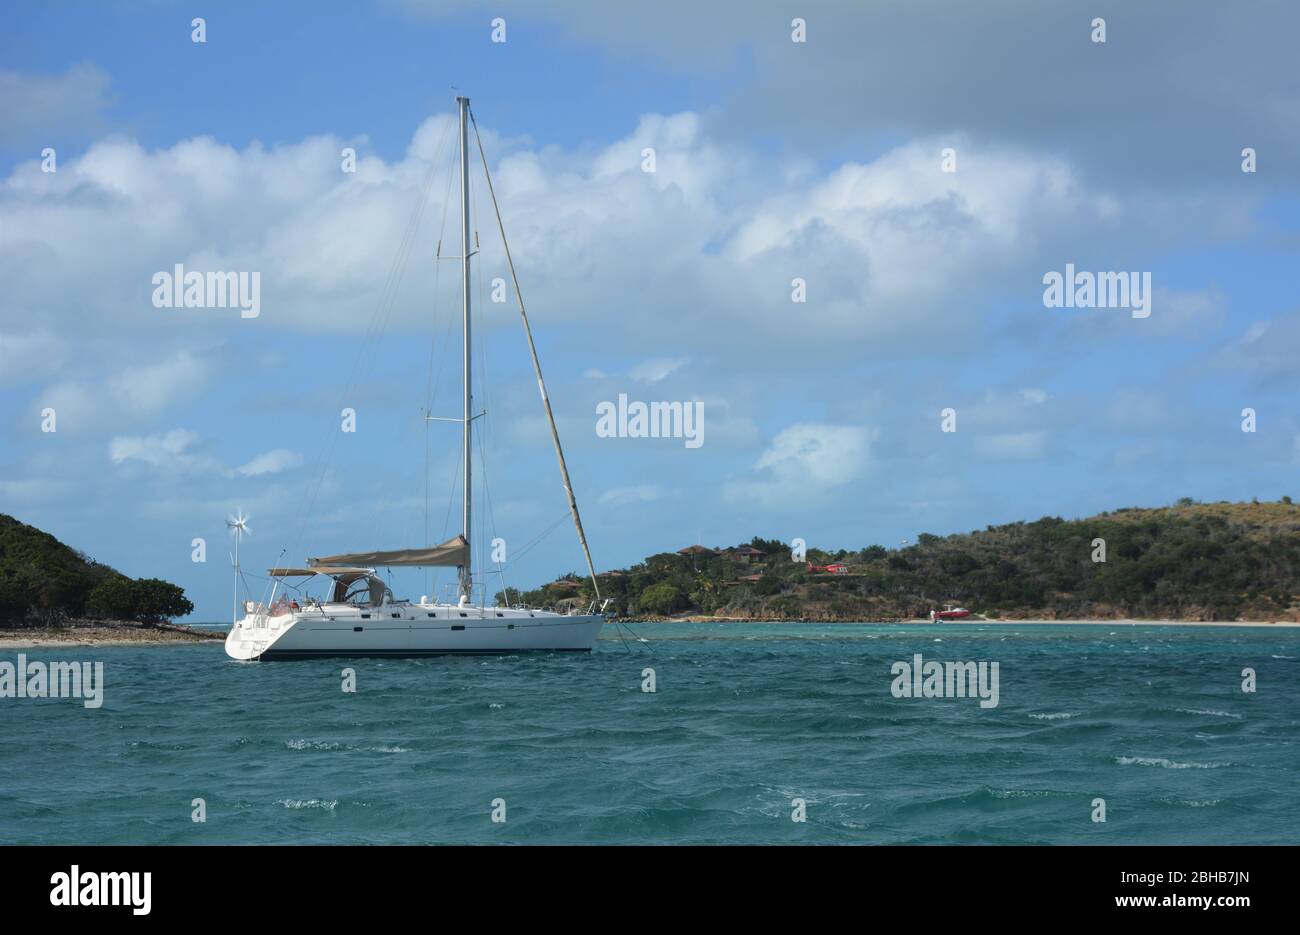 A yacht in the British Virgin Islands, Caribbean. Stock Photo